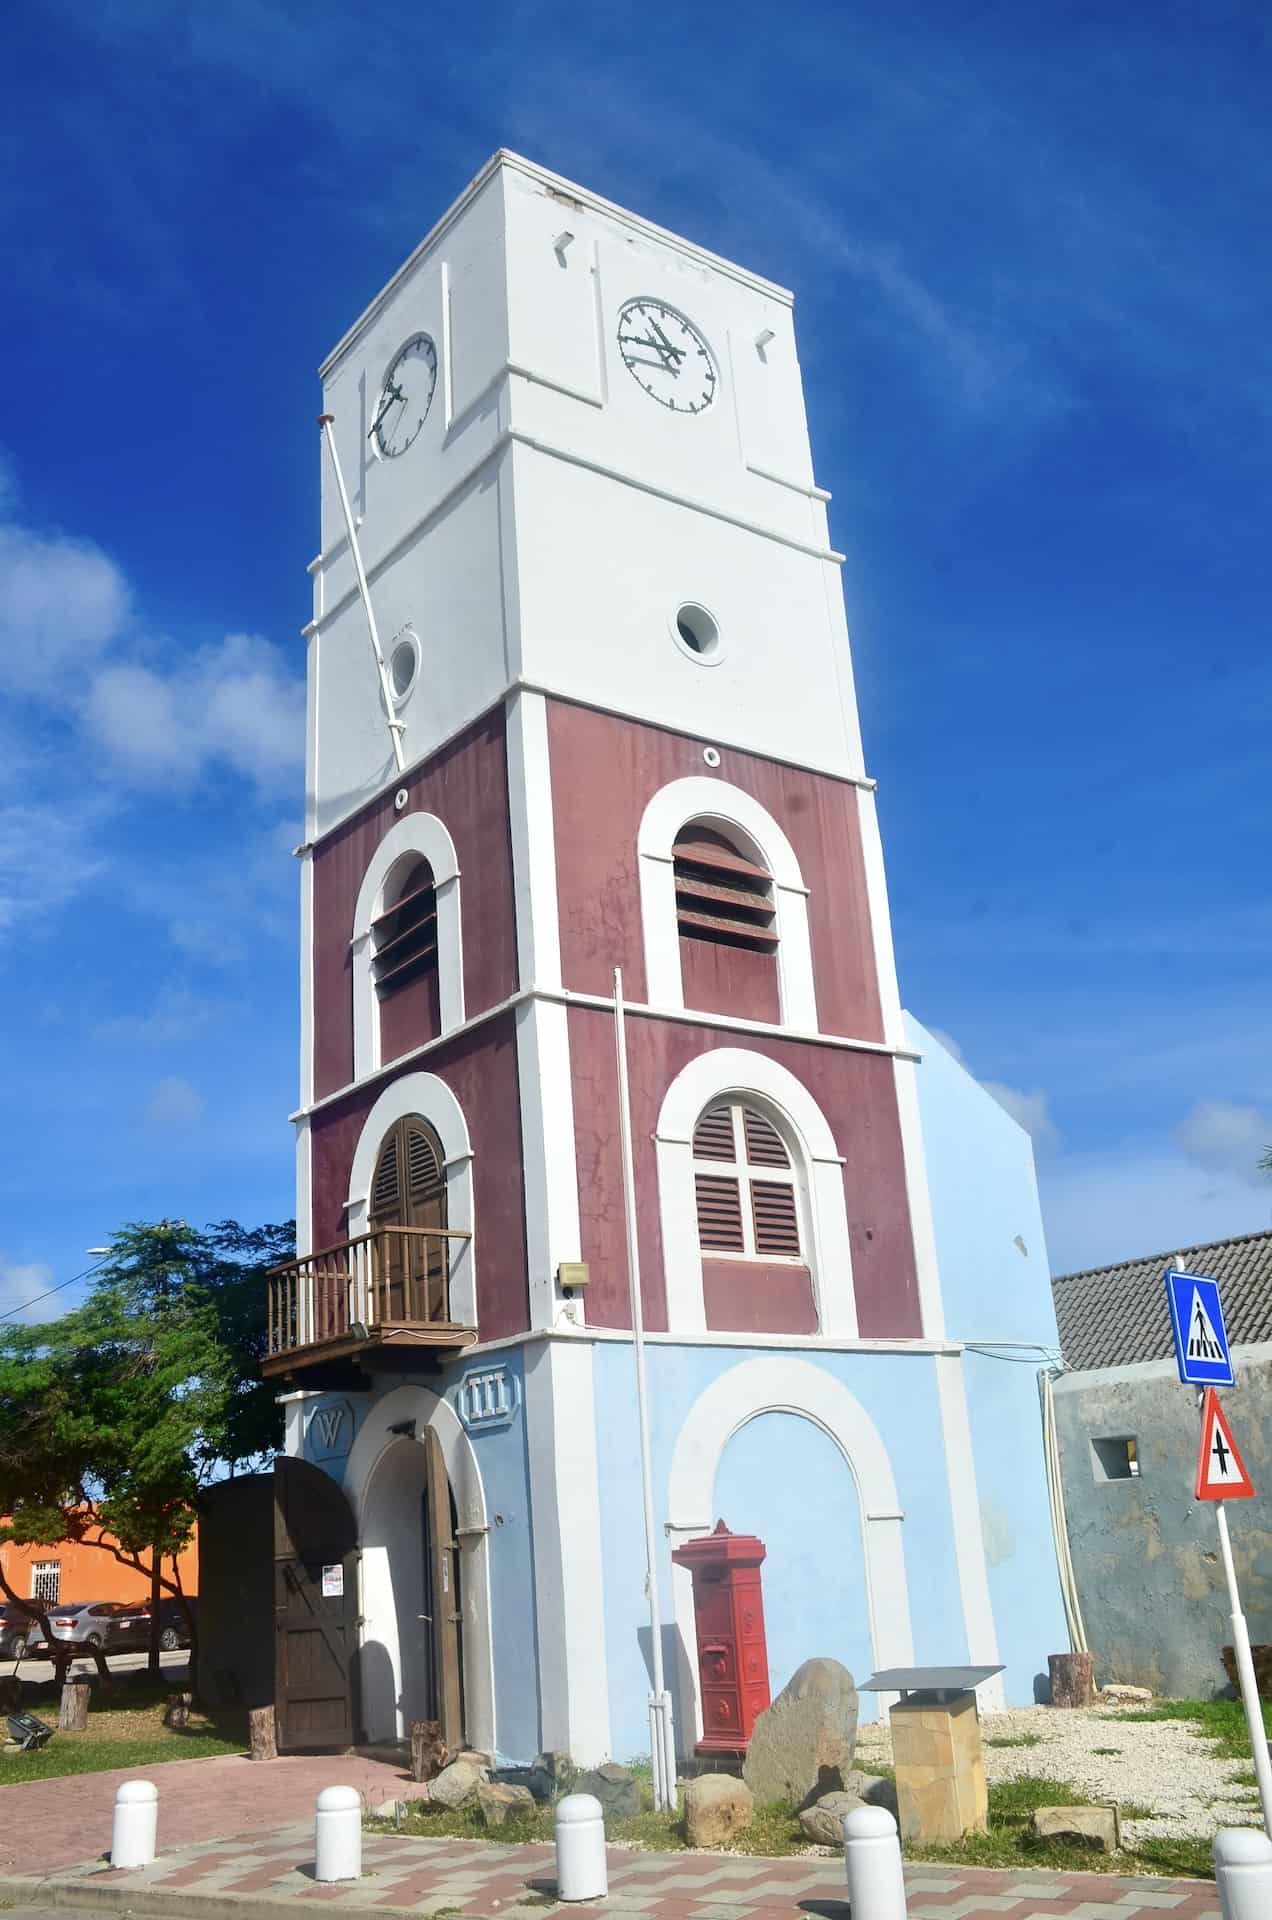 Willem III Tower at Fort Zoutman in Oranjestad, Aruba